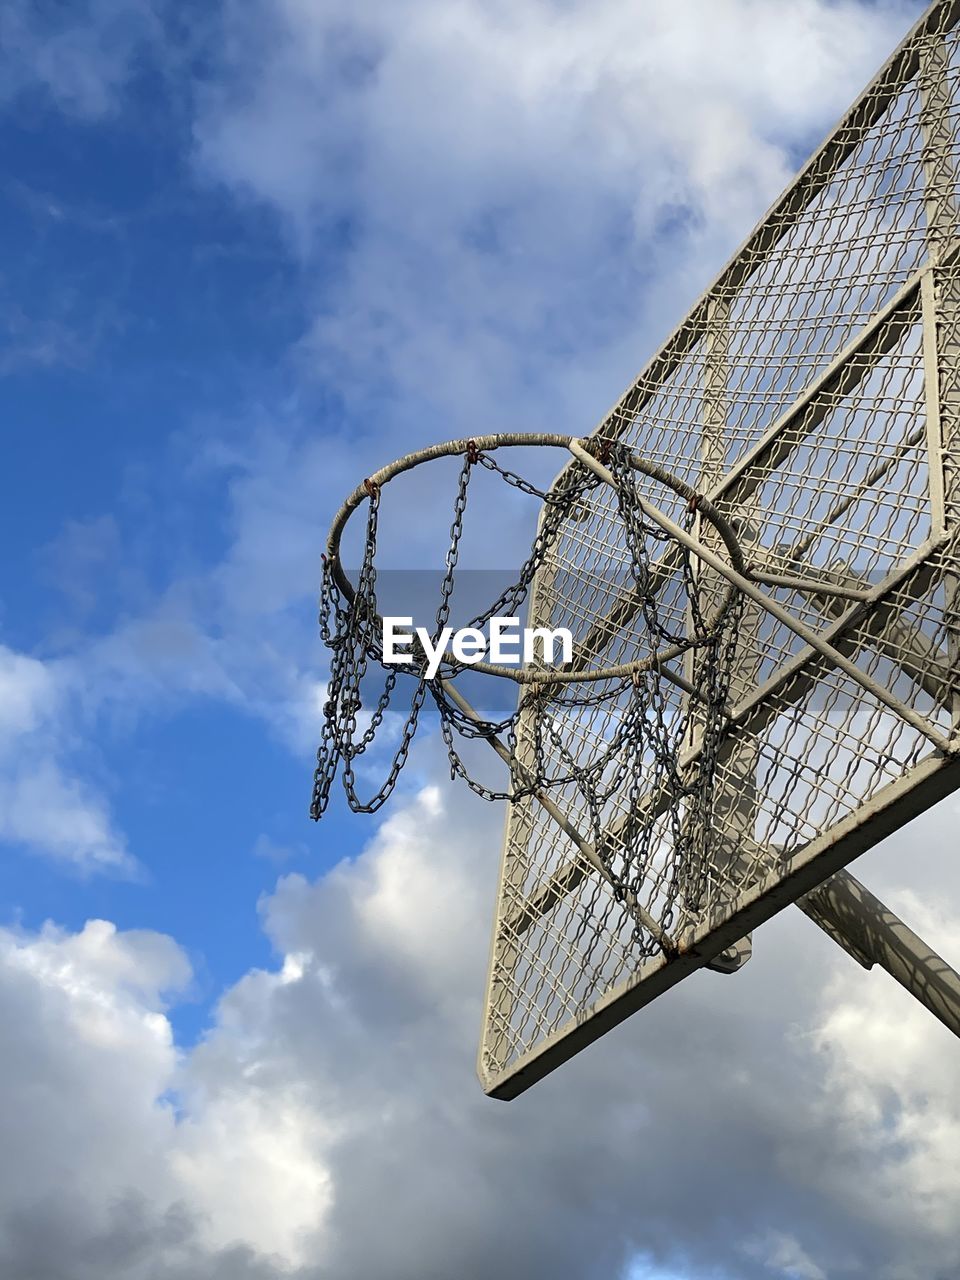 Basket in the sky